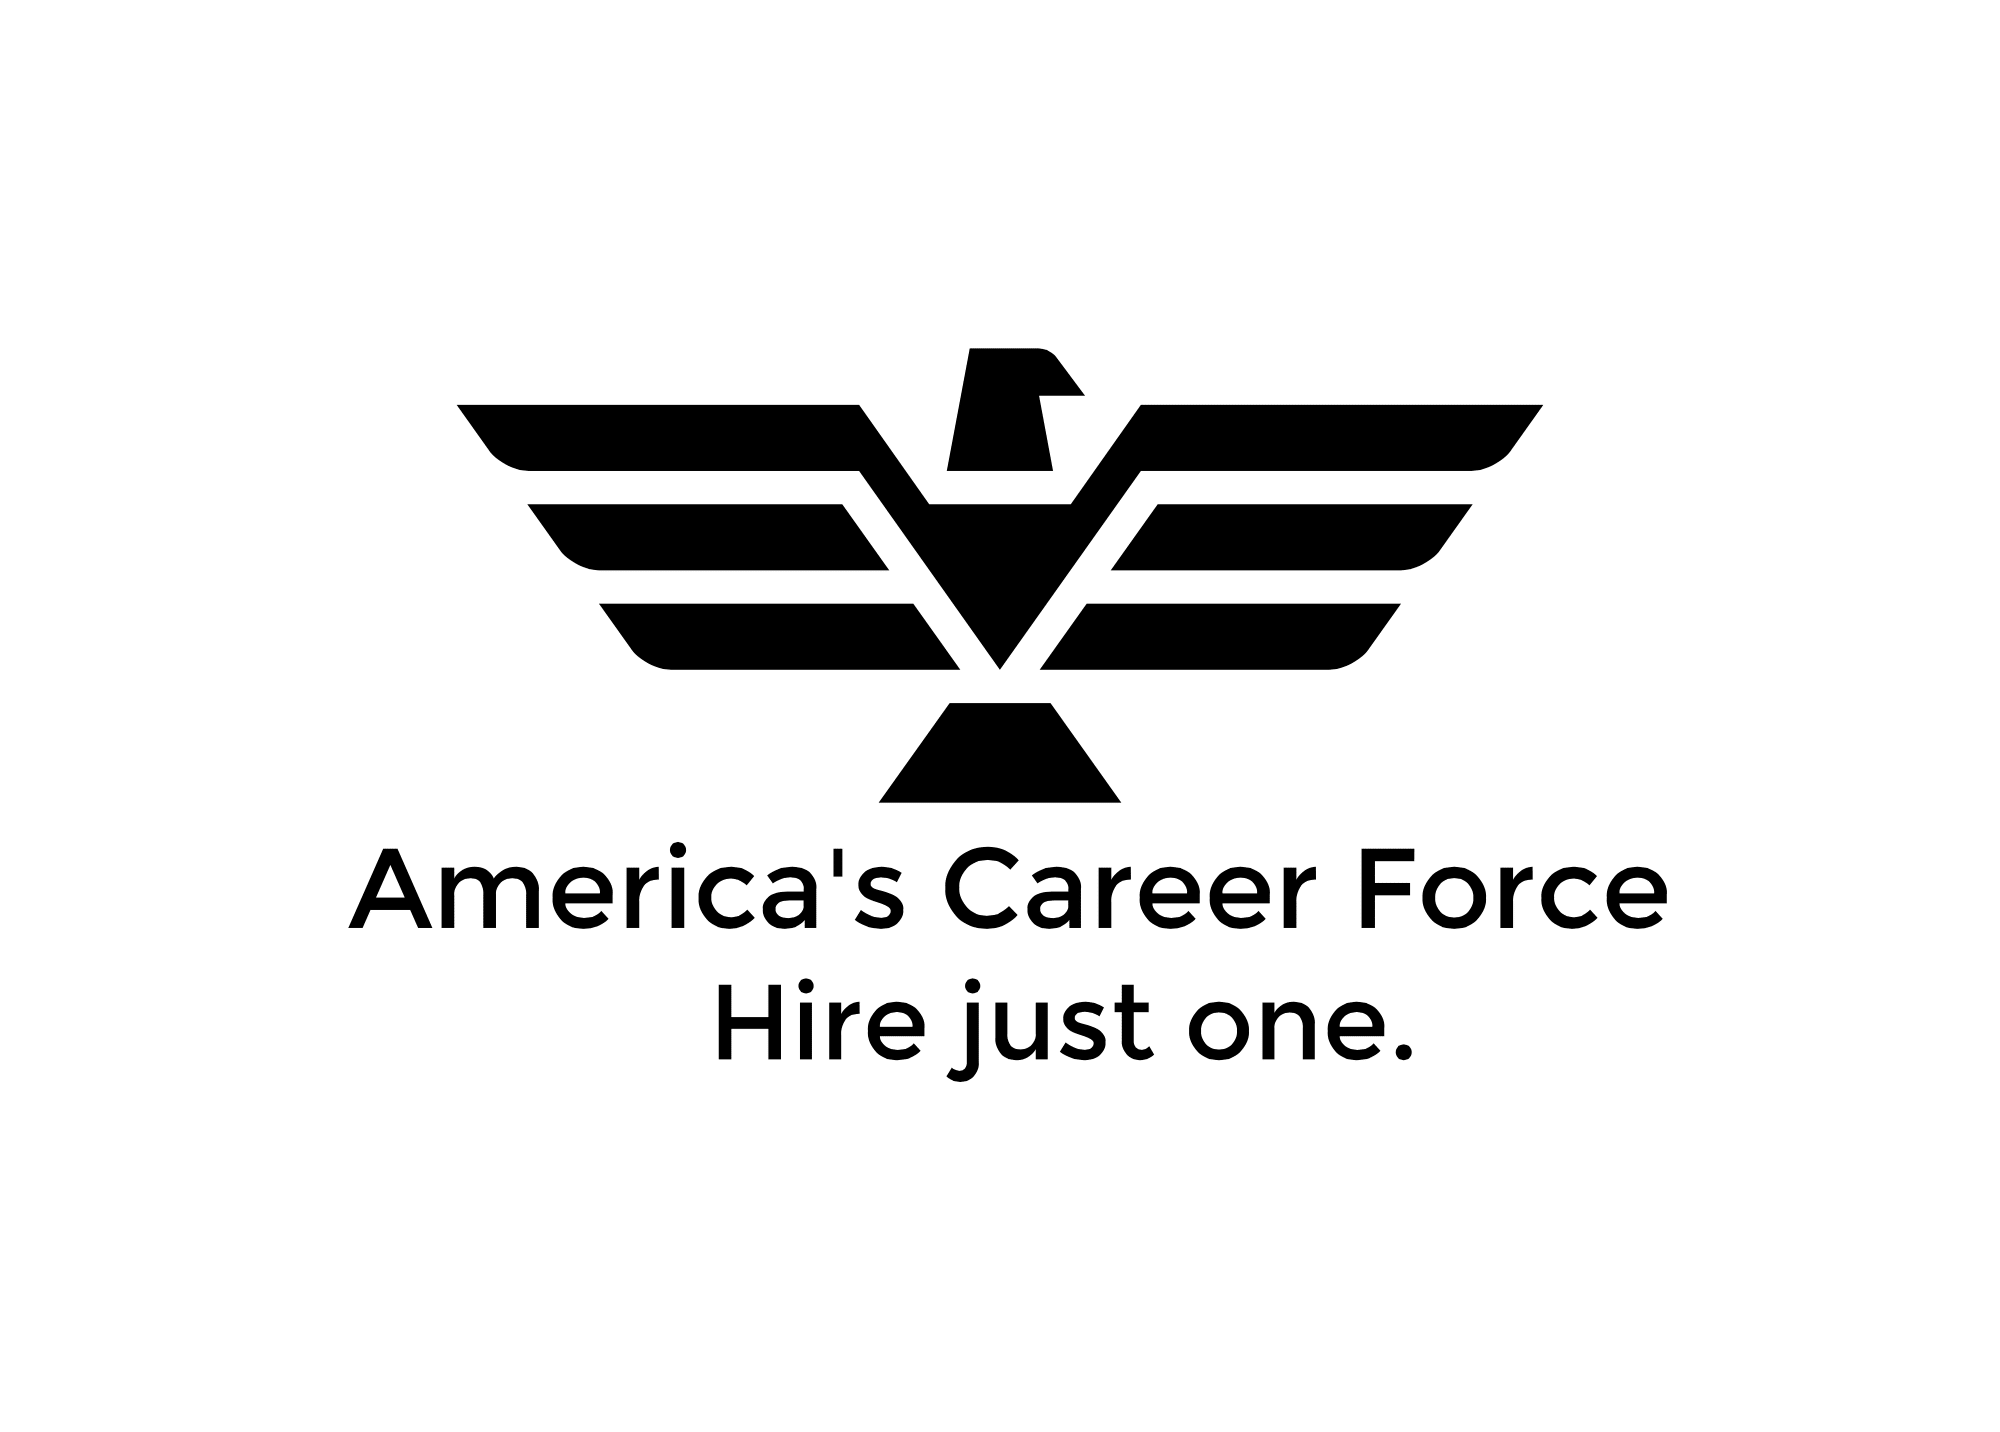 America's Career Force